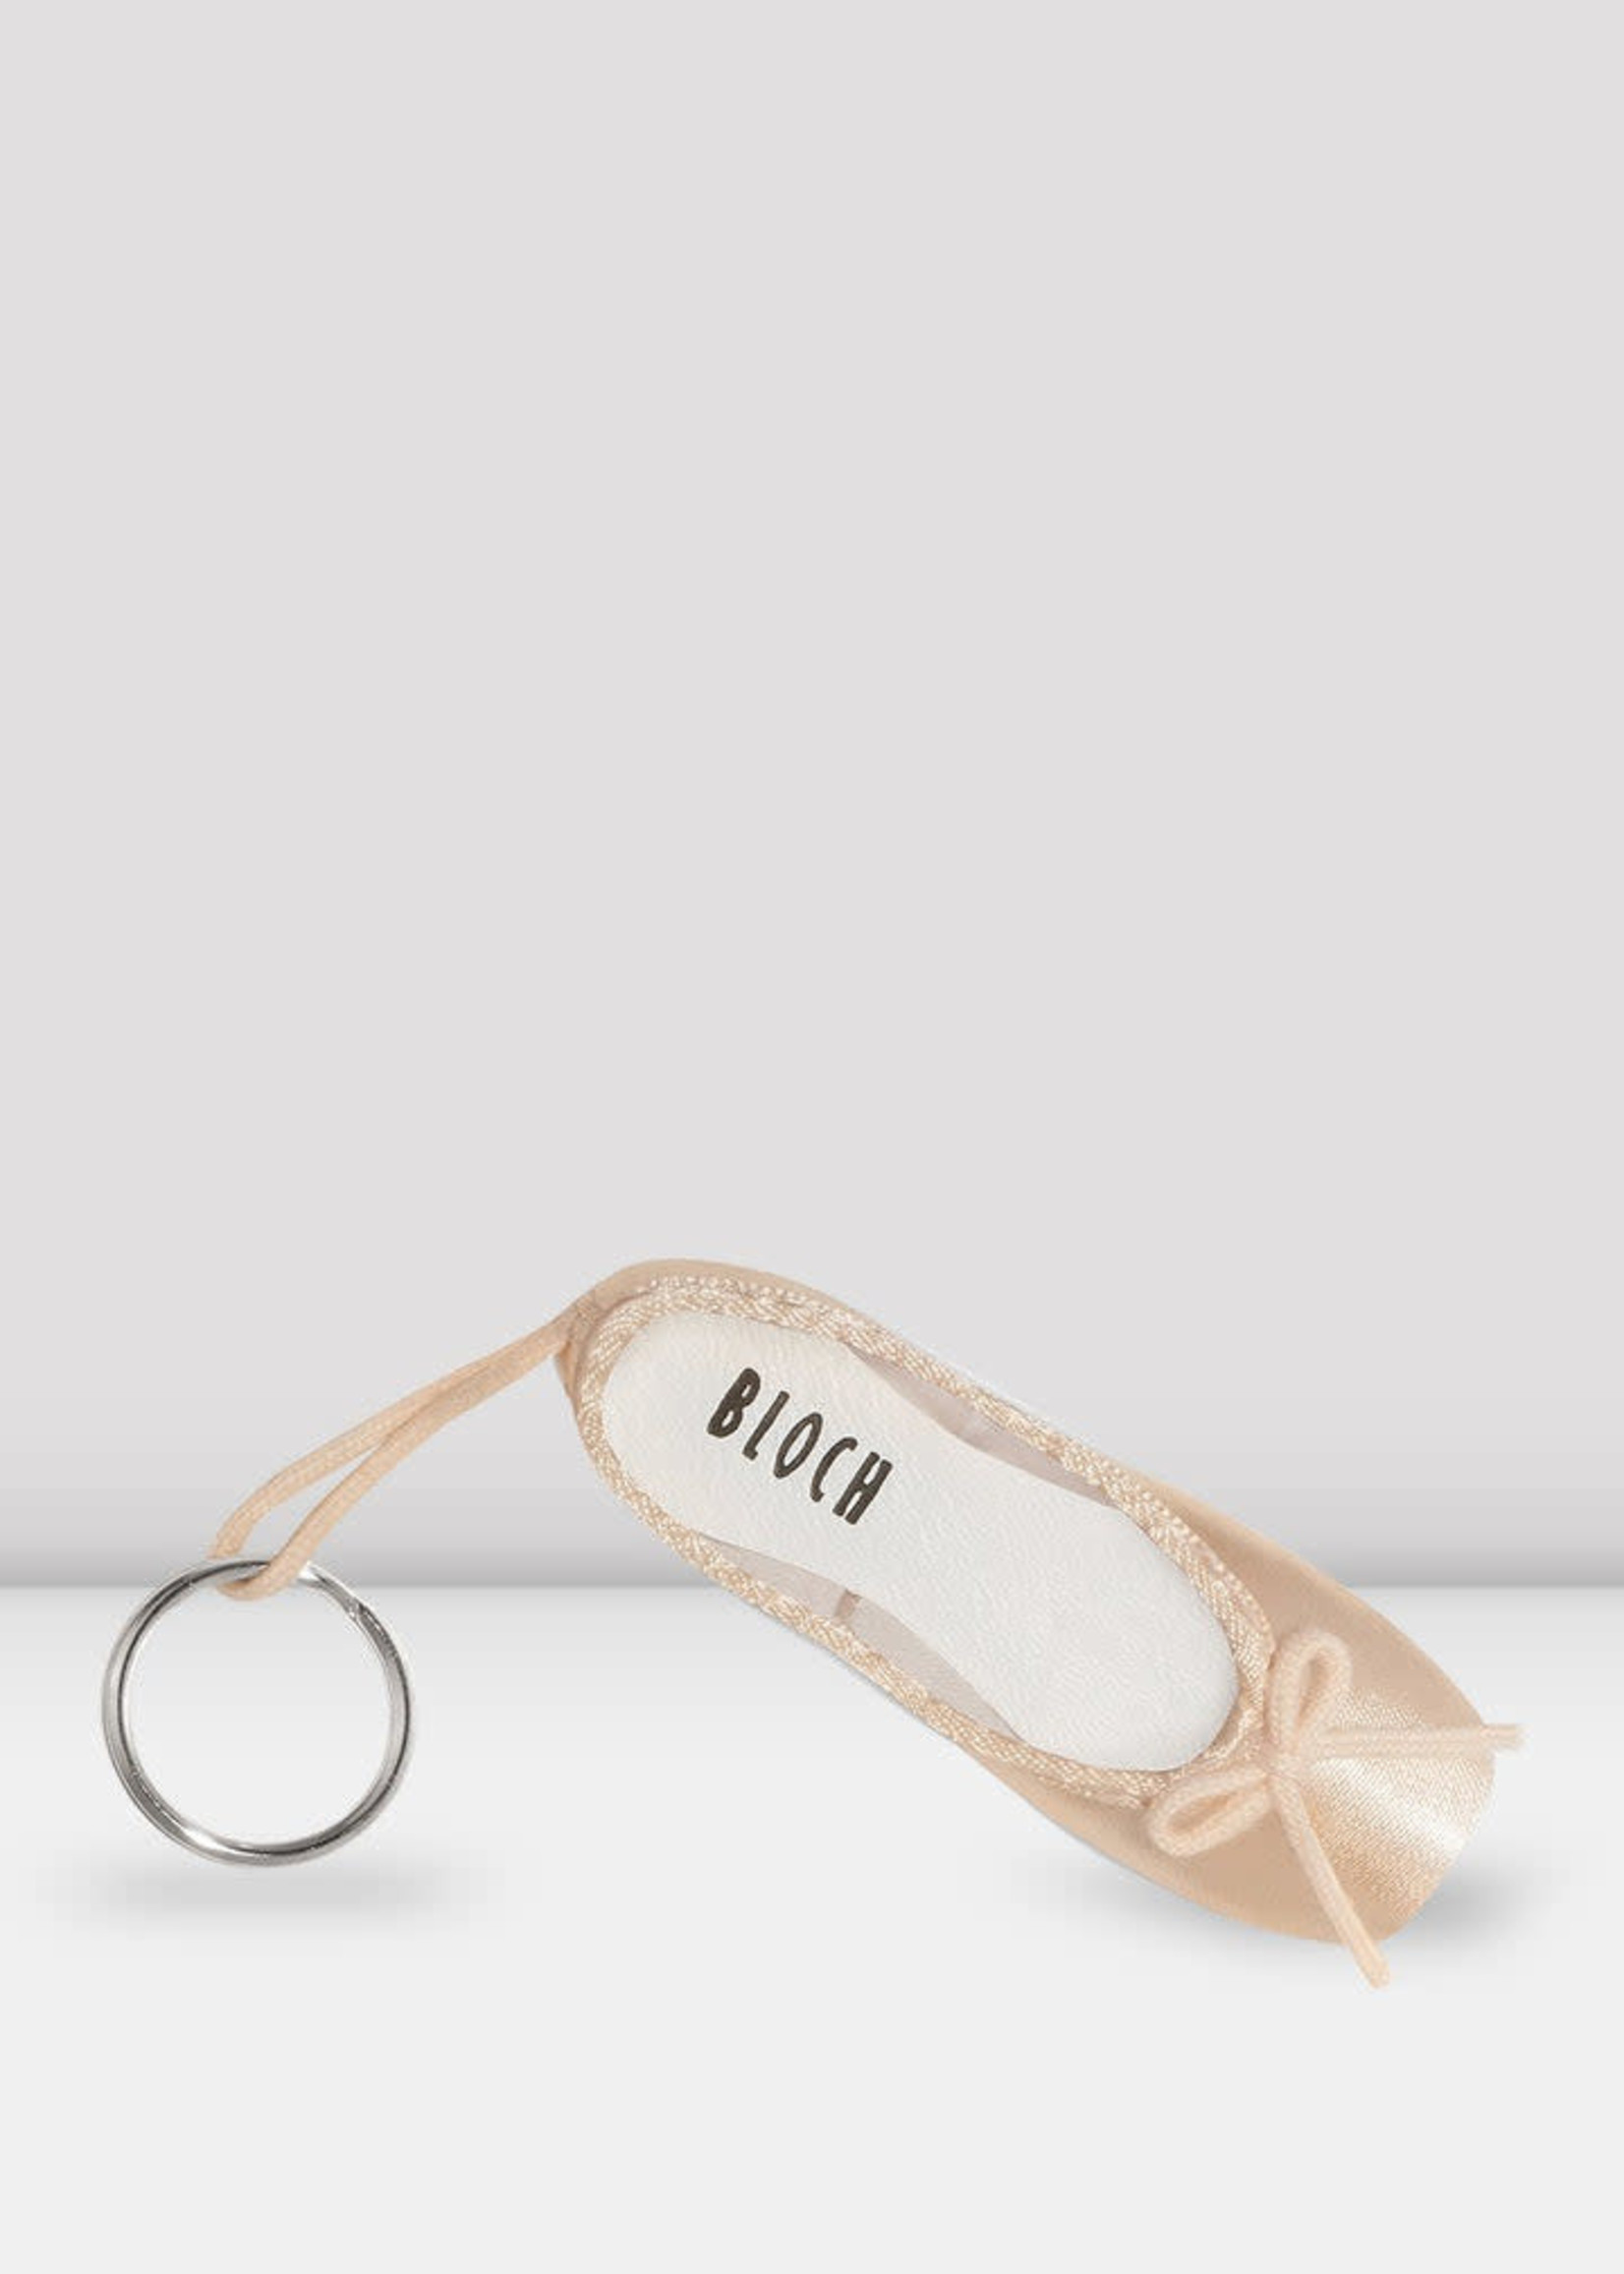 Bloch Mini Pointe Shoe Key Ring